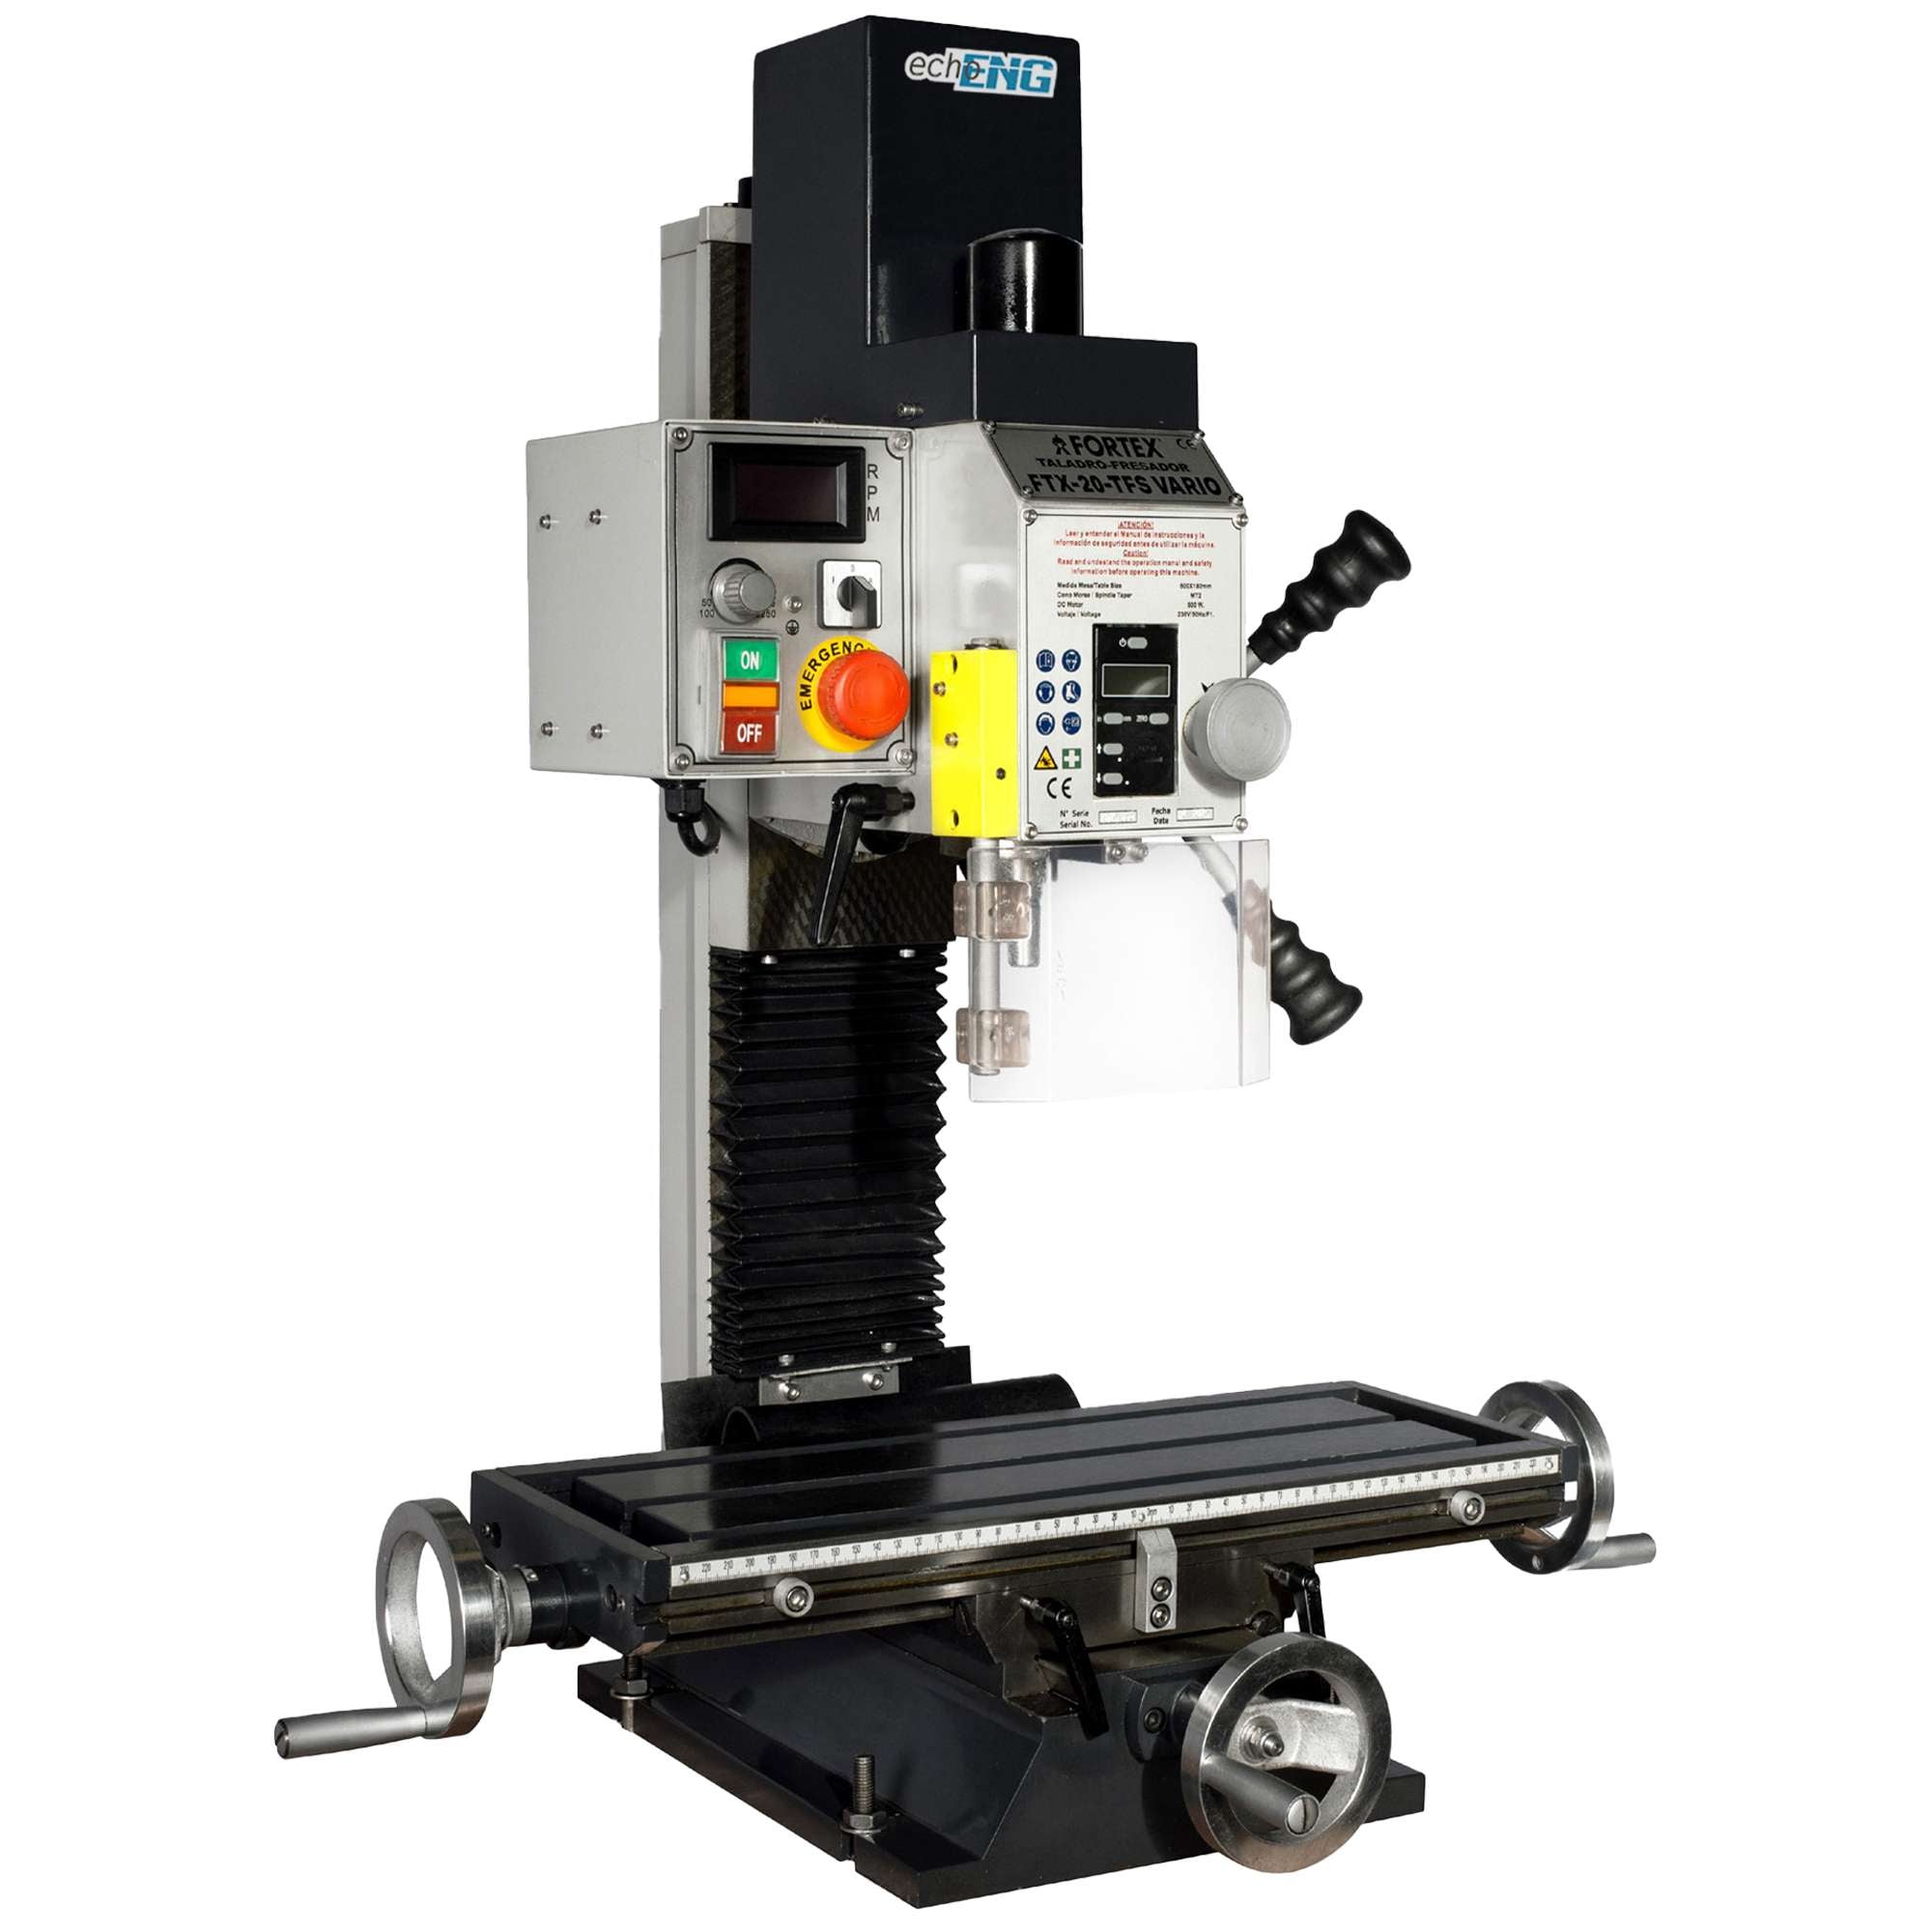 Milling-drilling machine FTX-20L-TFS VARIO bench type - echoENG